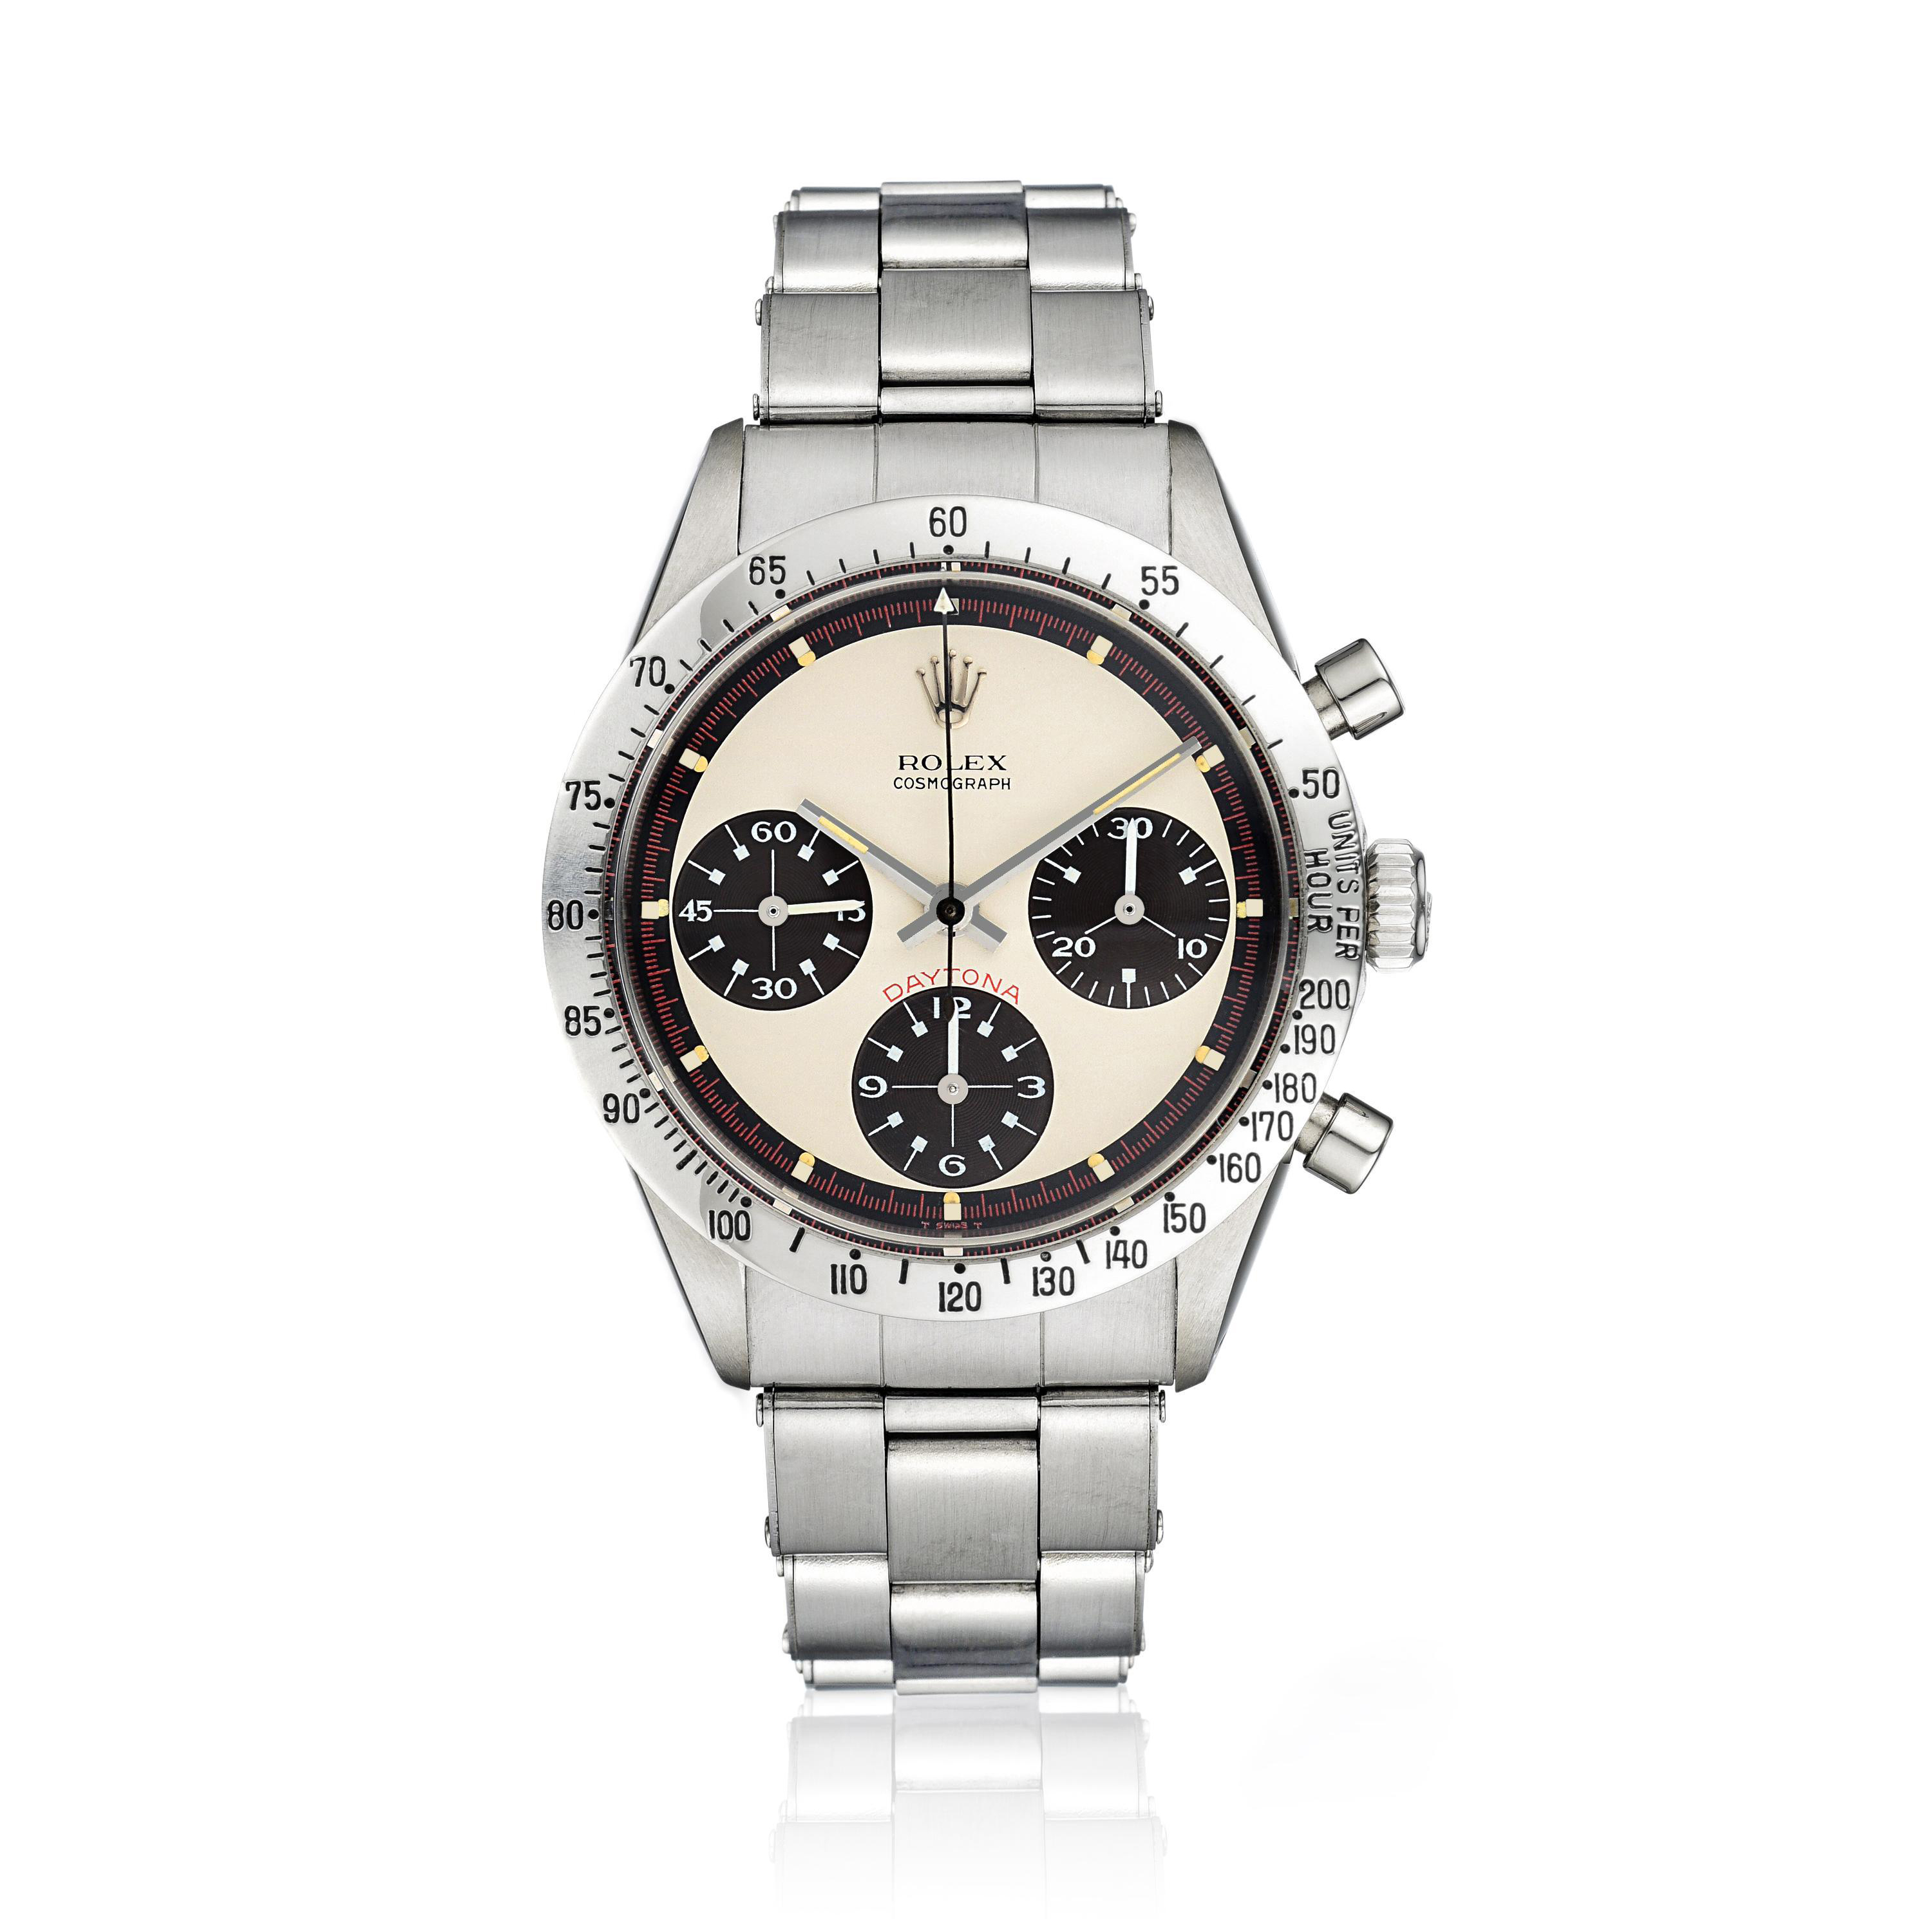 Rolex Paul Newman Daytona - Fortuna Important Watches